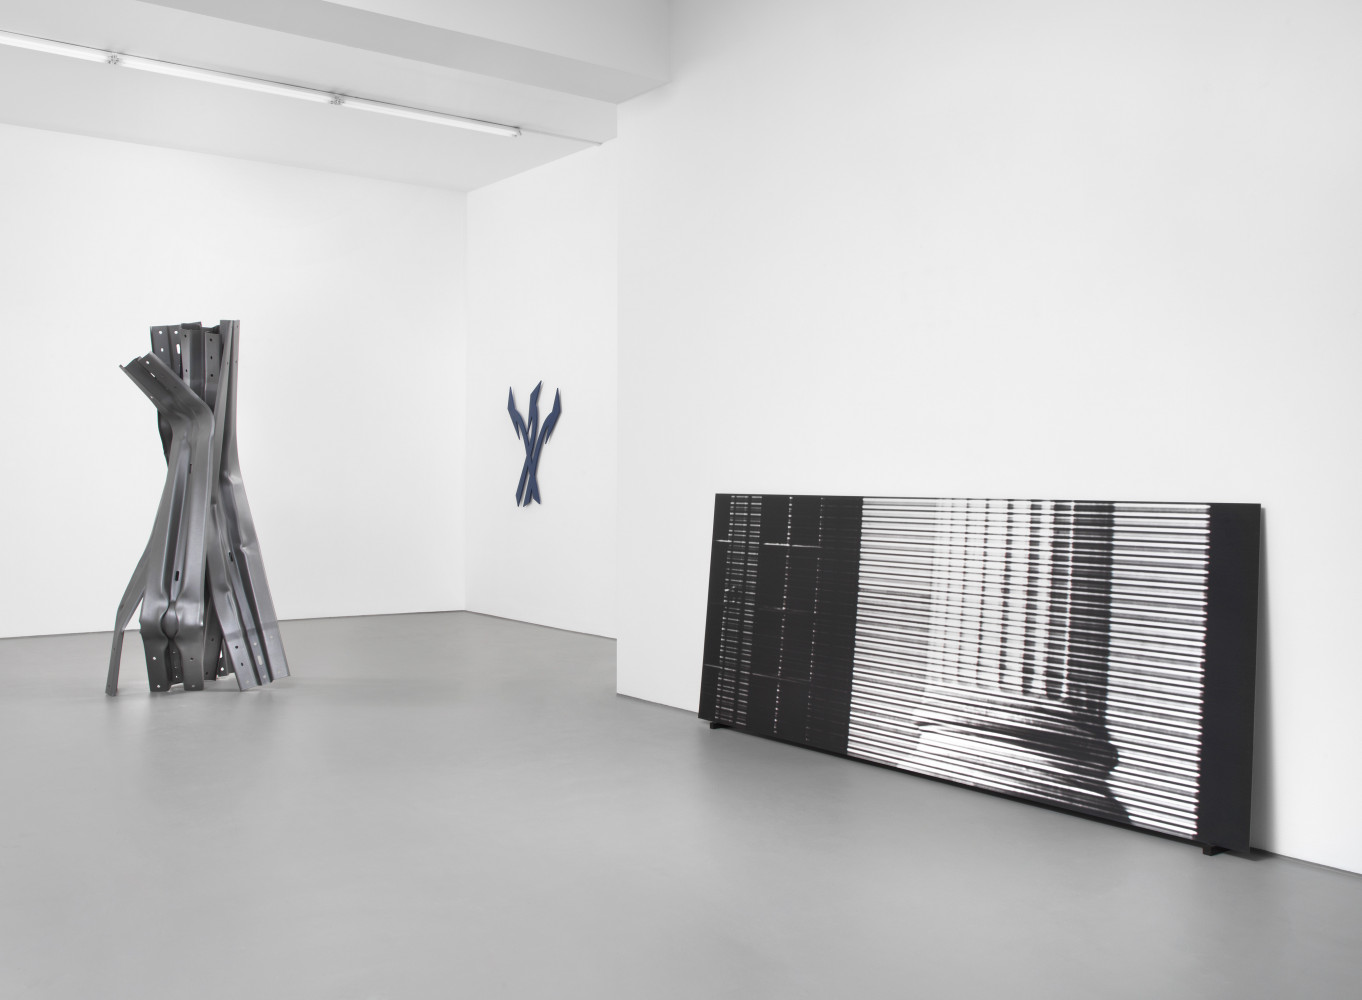 Bettina Pousttchi, ‘Bettina Pousttchi – Directions’, Installationsansicht, Buchmann Galerie, 2021